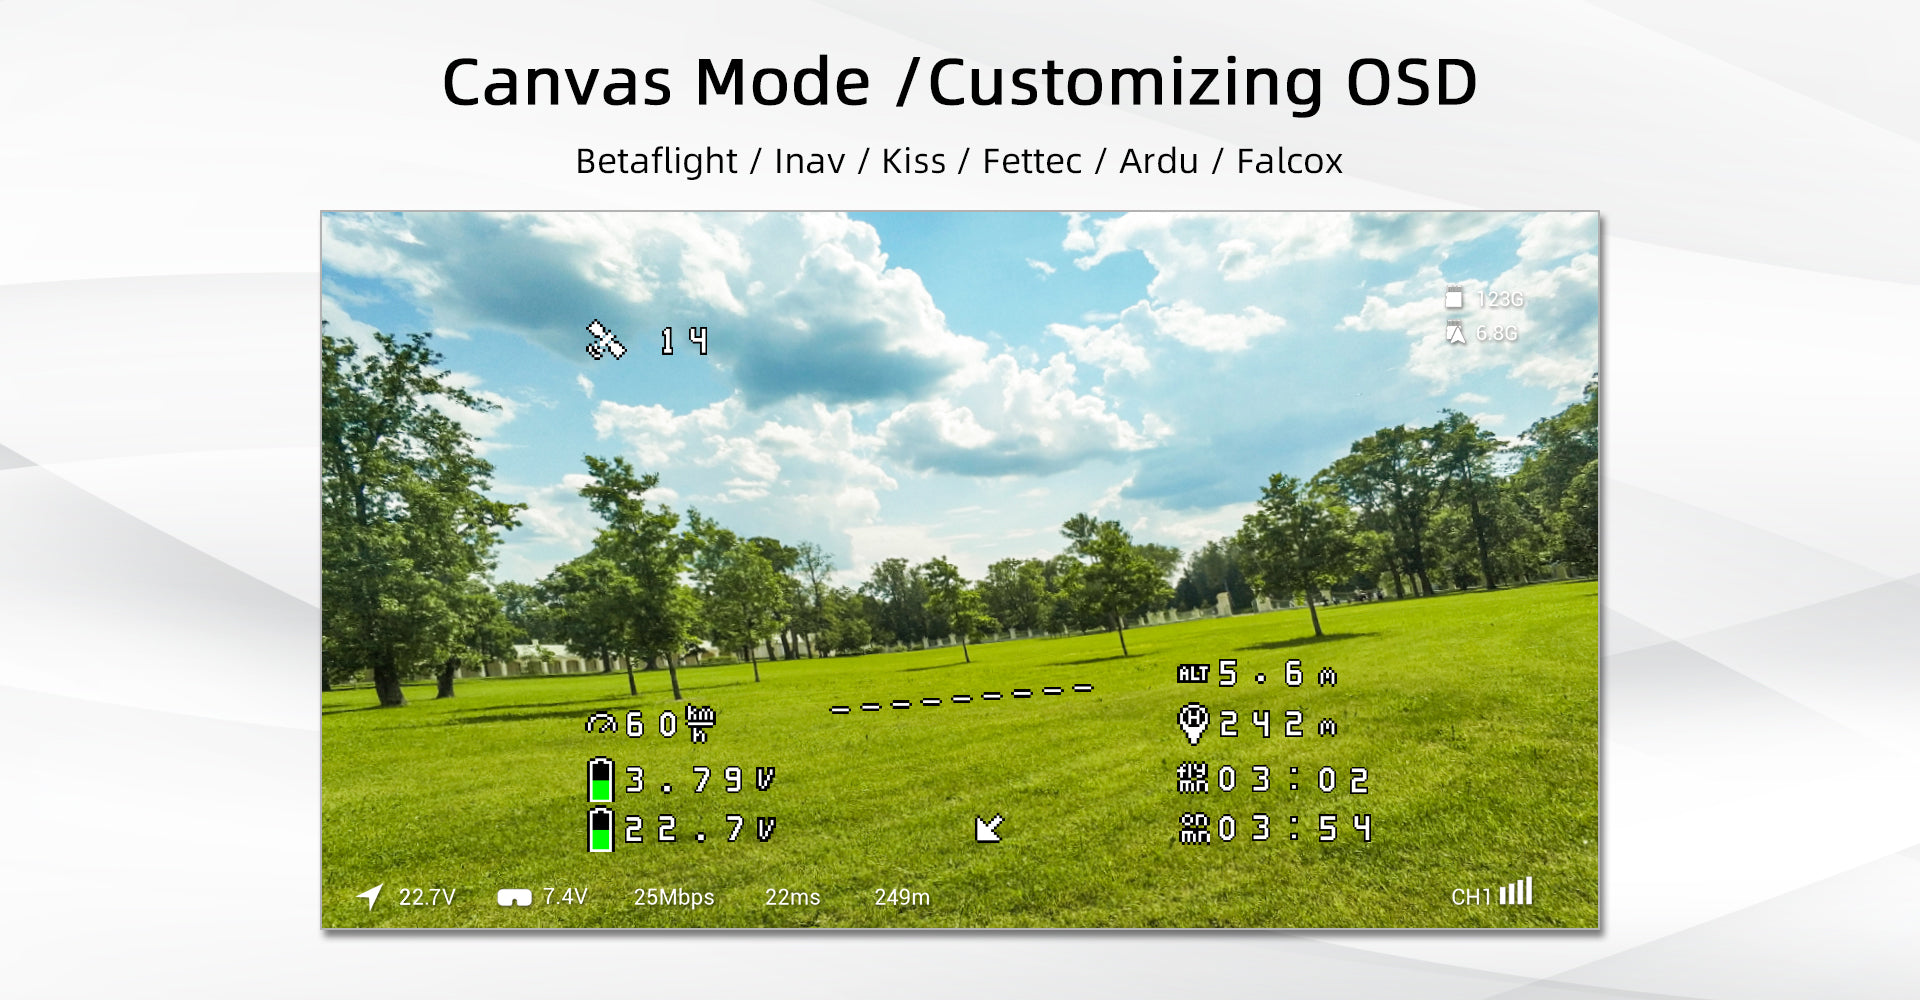 Walksnail Avatar HD Mini 1s Lite Kit, Canvas Mode Supporting Betaflight, kiss, Inav, Ardu full OSD display